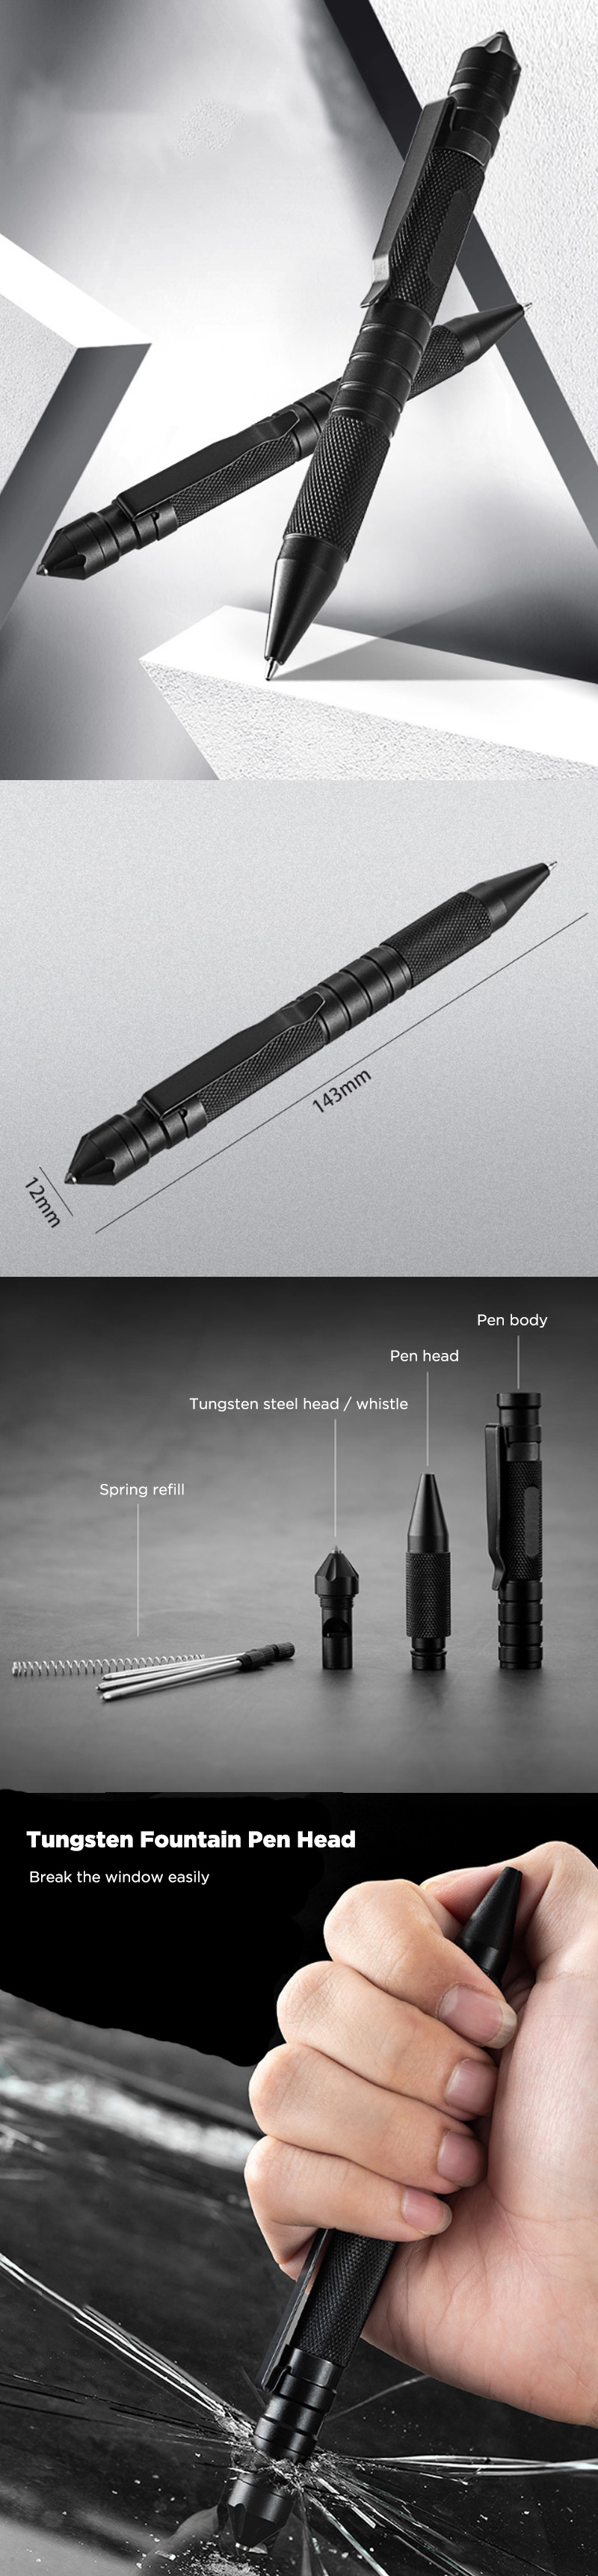 IPReereg-3-In-1-EDC-Tactical-Pen-Aluminum-Alloy-Tungsten-Steel-Head-Whistle-Writting-Emergency-Safe--1616559-1